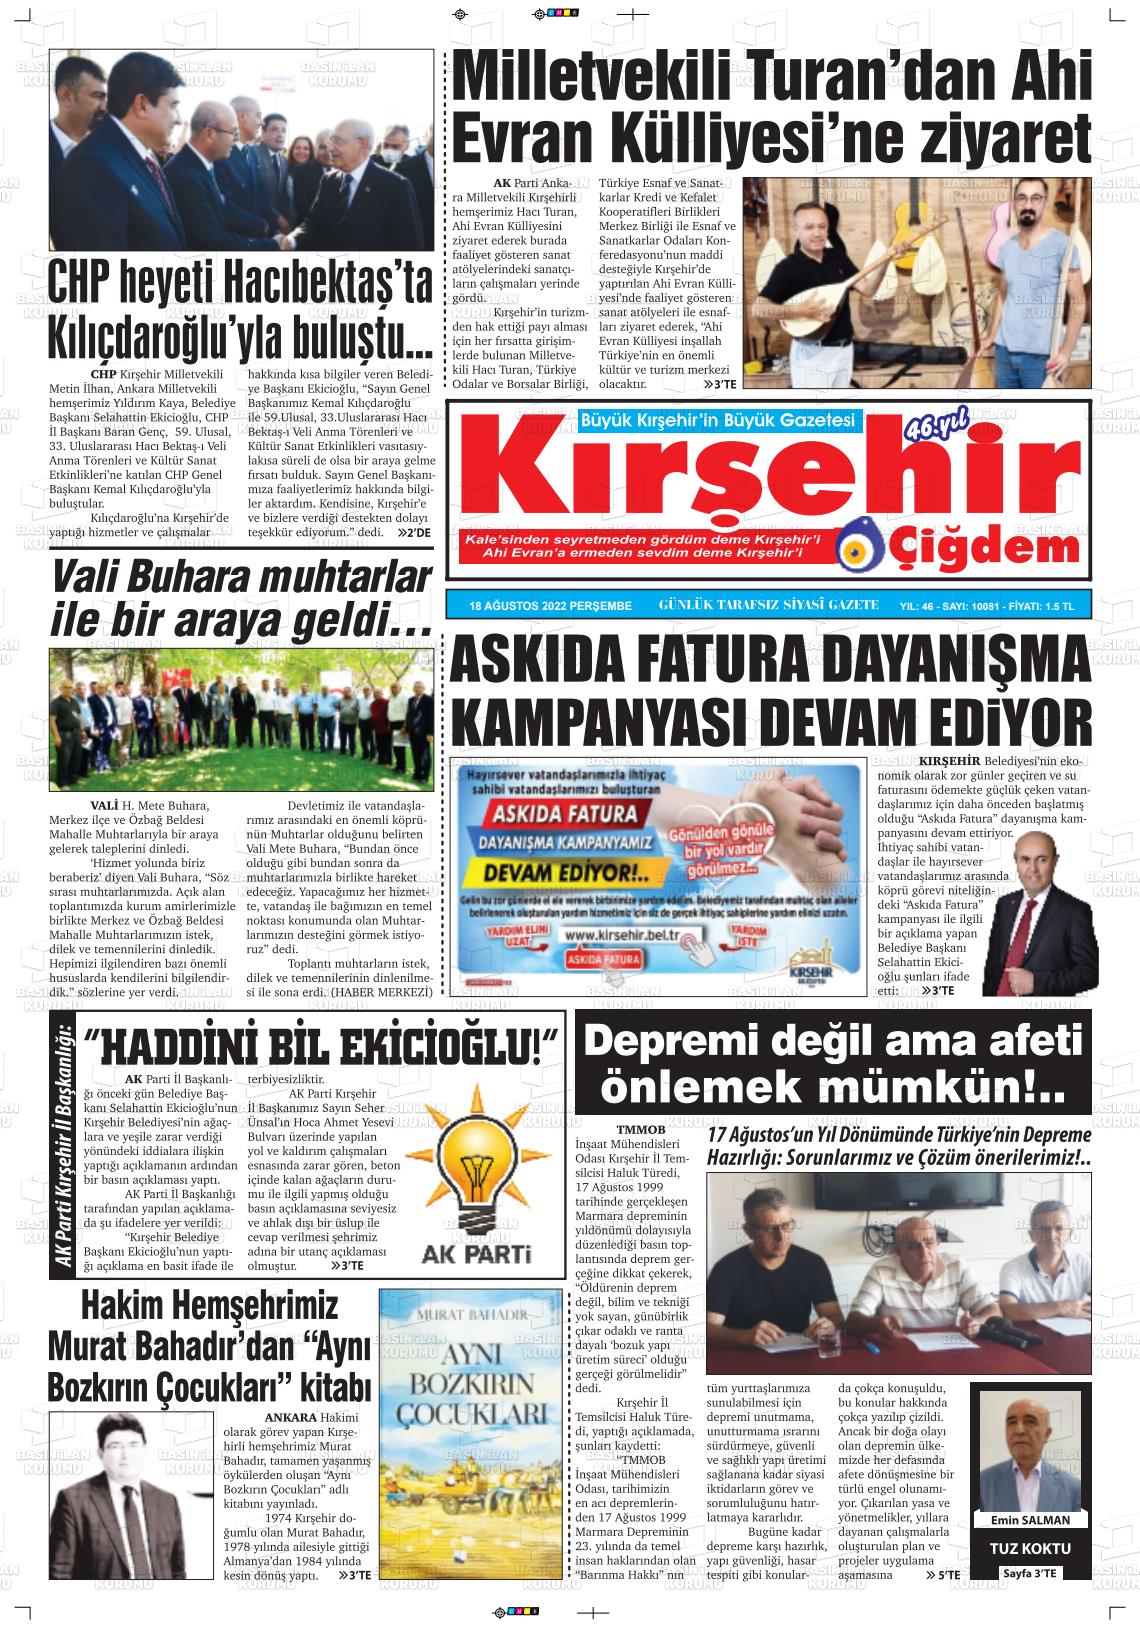 18 Ağustos 2022 Kırşehir Çiğdem Gazete Manşeti